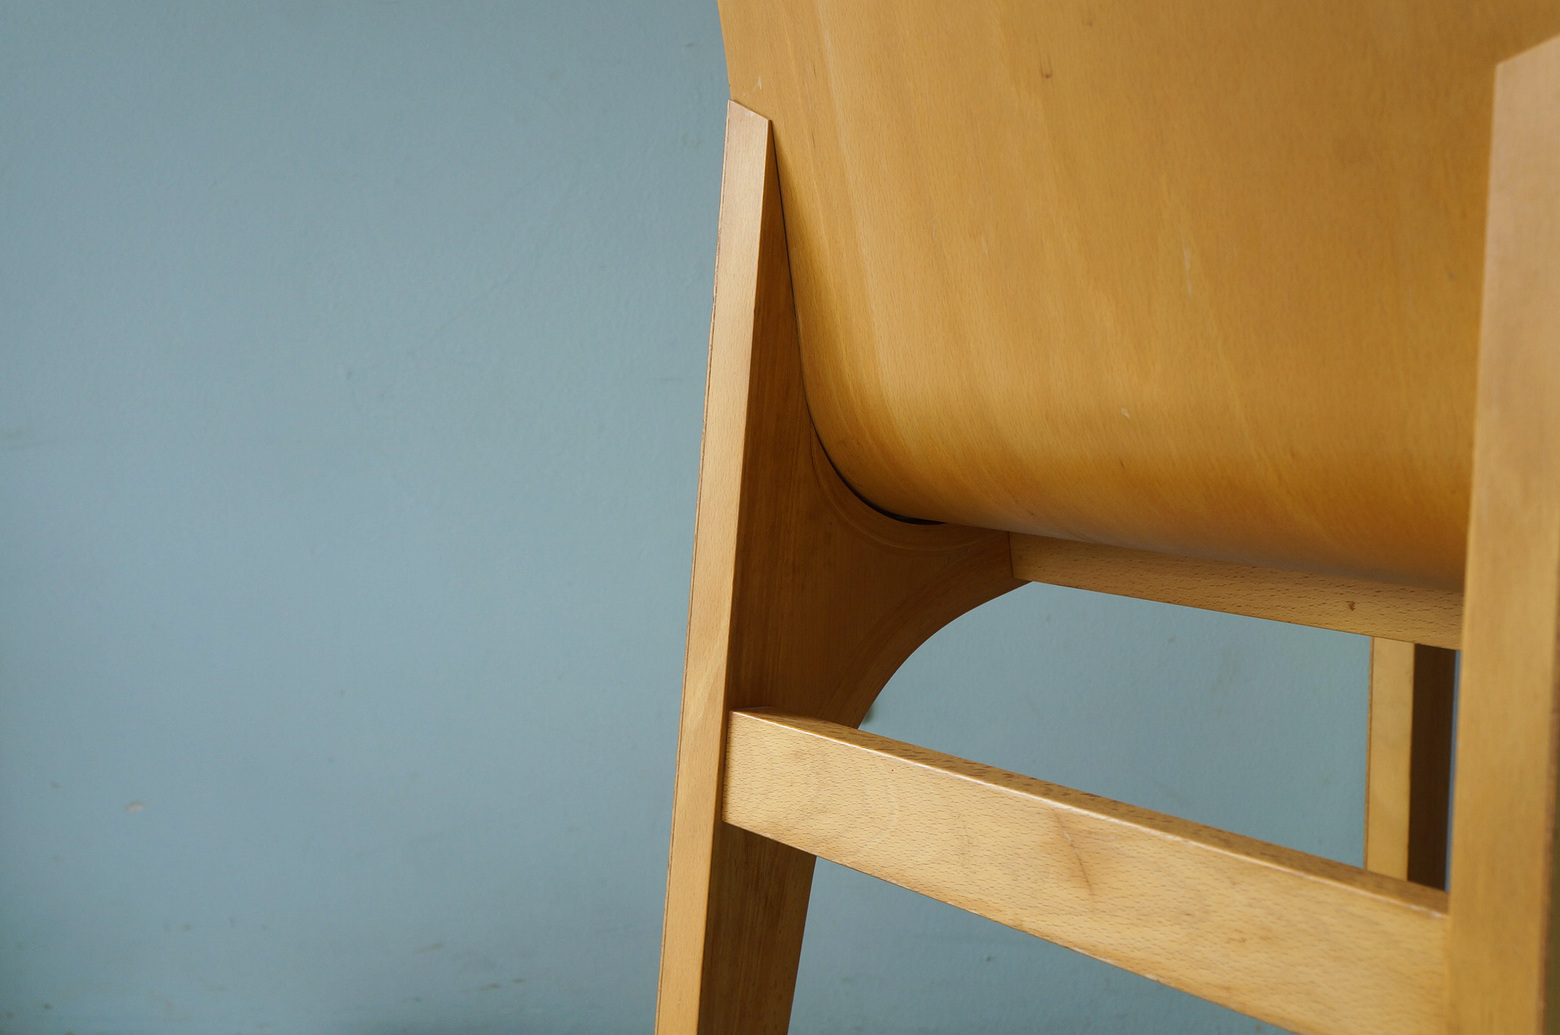 ICL by SAZABY Plywood Dining Chair/サザビー プライウッド ダイニングチェア 椅子 モダン ナチュラル クリーム イエロー